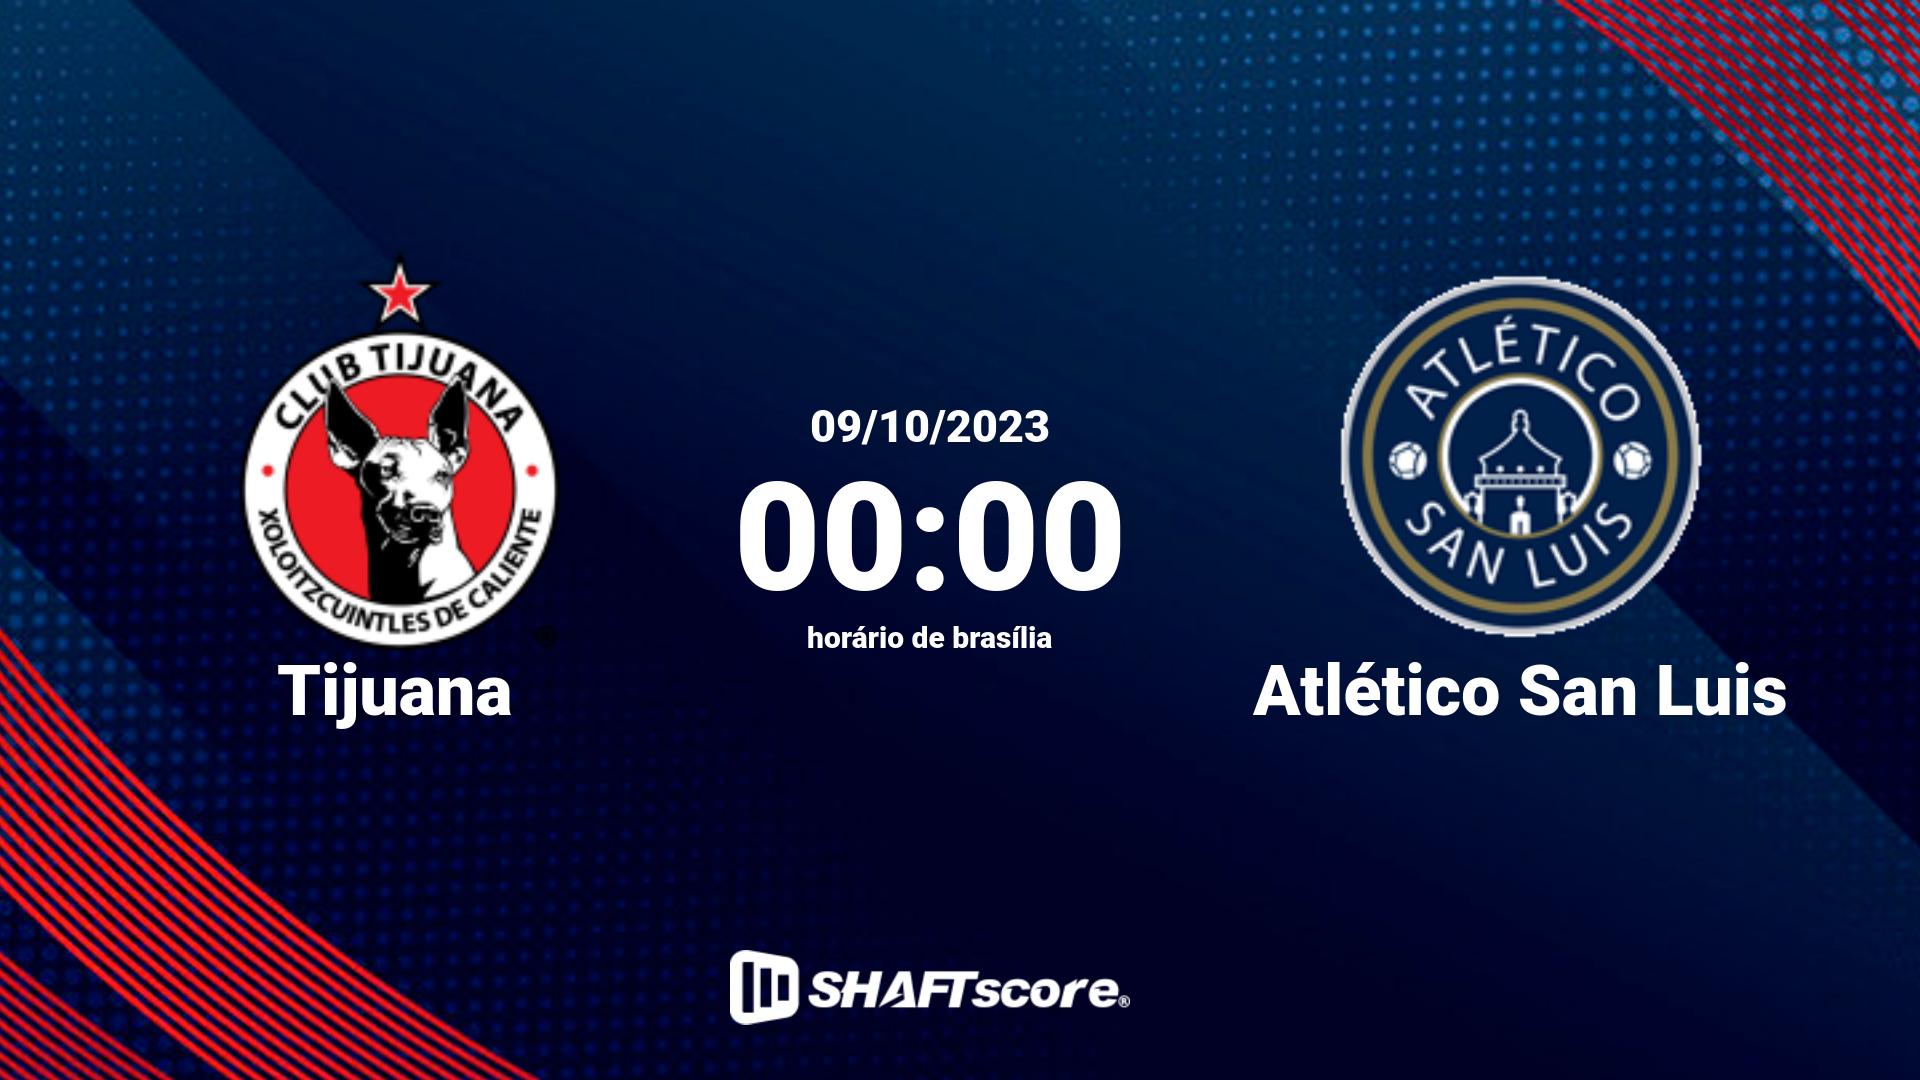 Estatísticas do jogo Tijuana vs Atlético San Luis 09.10 00:00